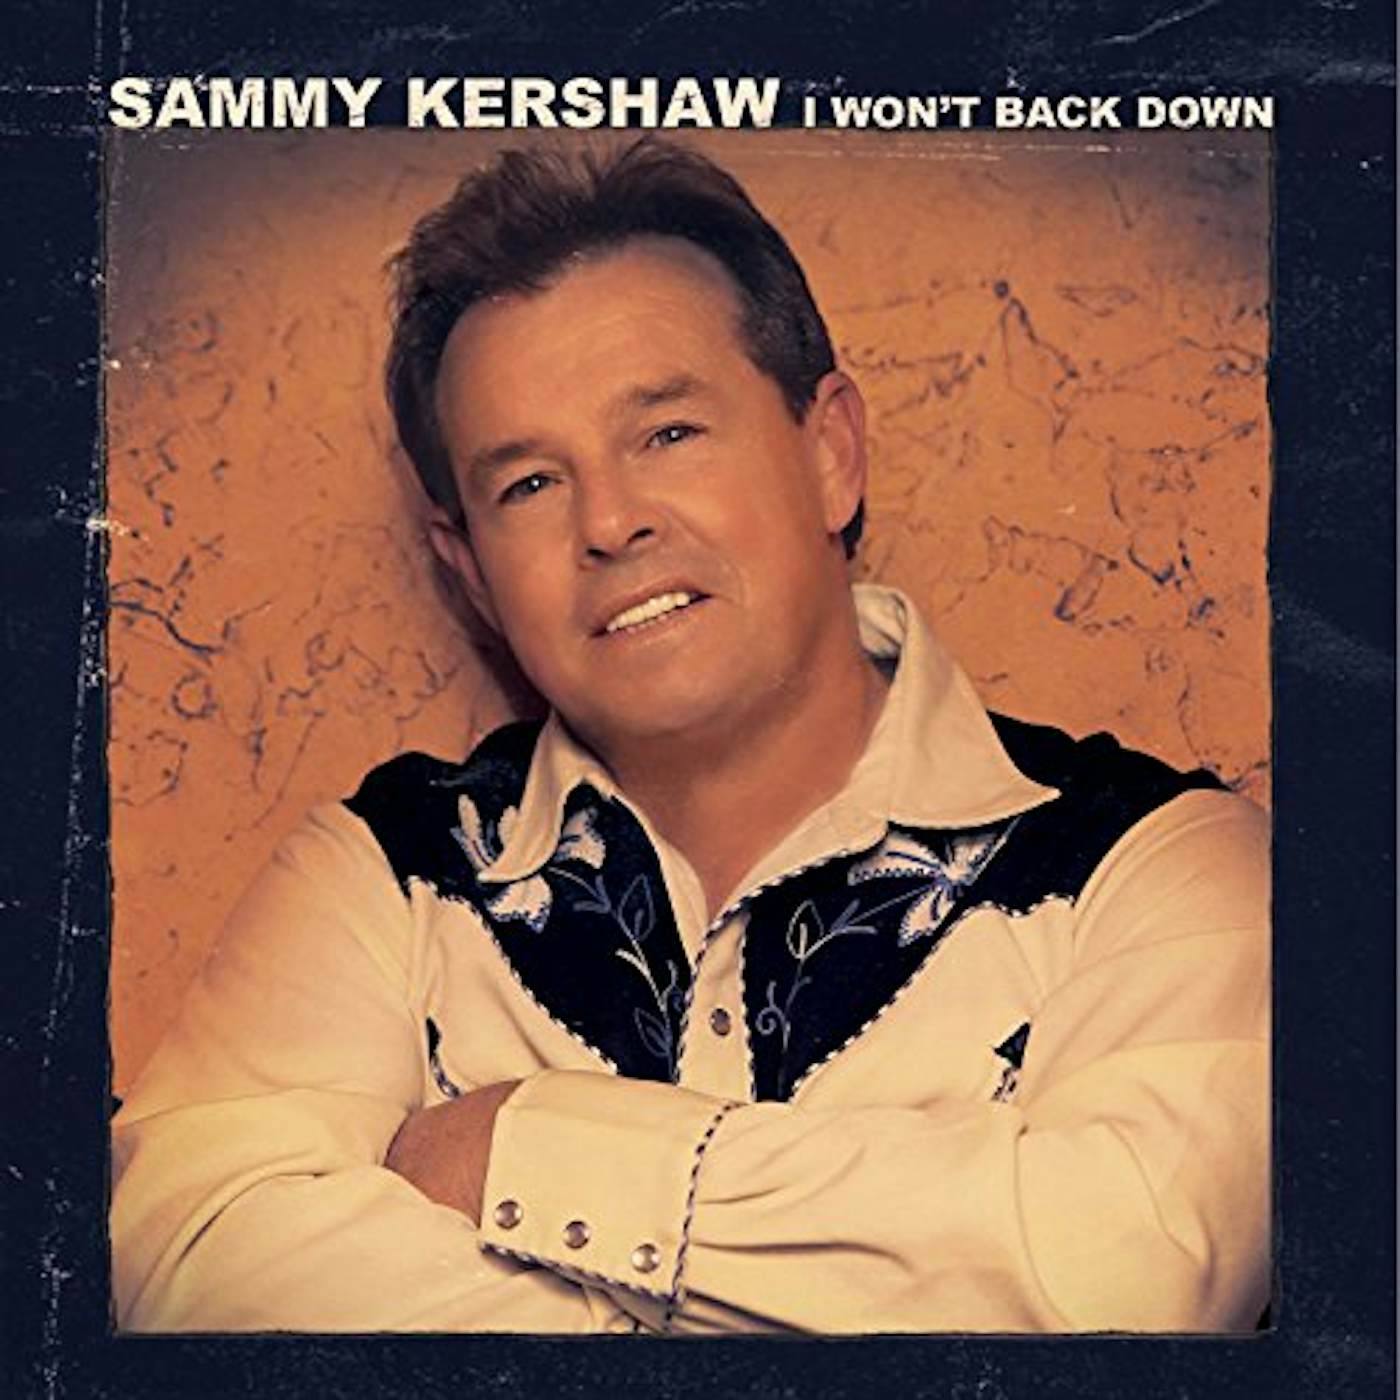 Sammy Kershaw WON'T BACK DOWN CD